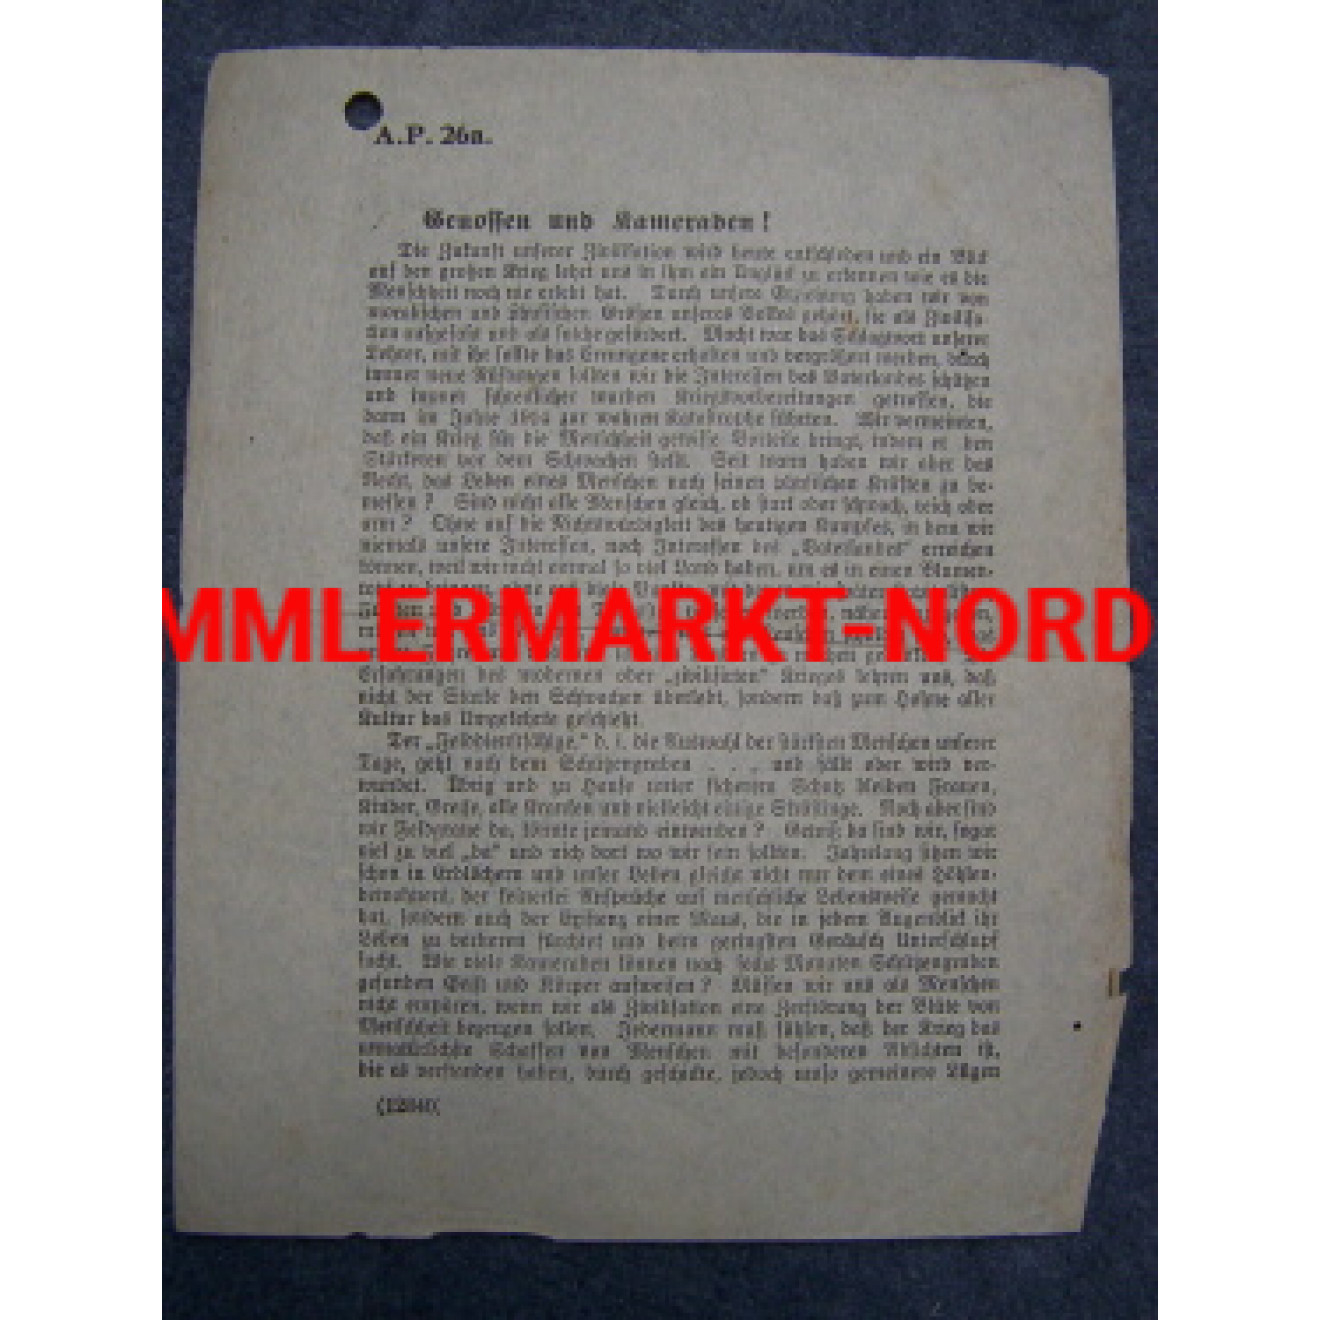 Handbill "comrade and comrade!" (identification A.P. 26a)